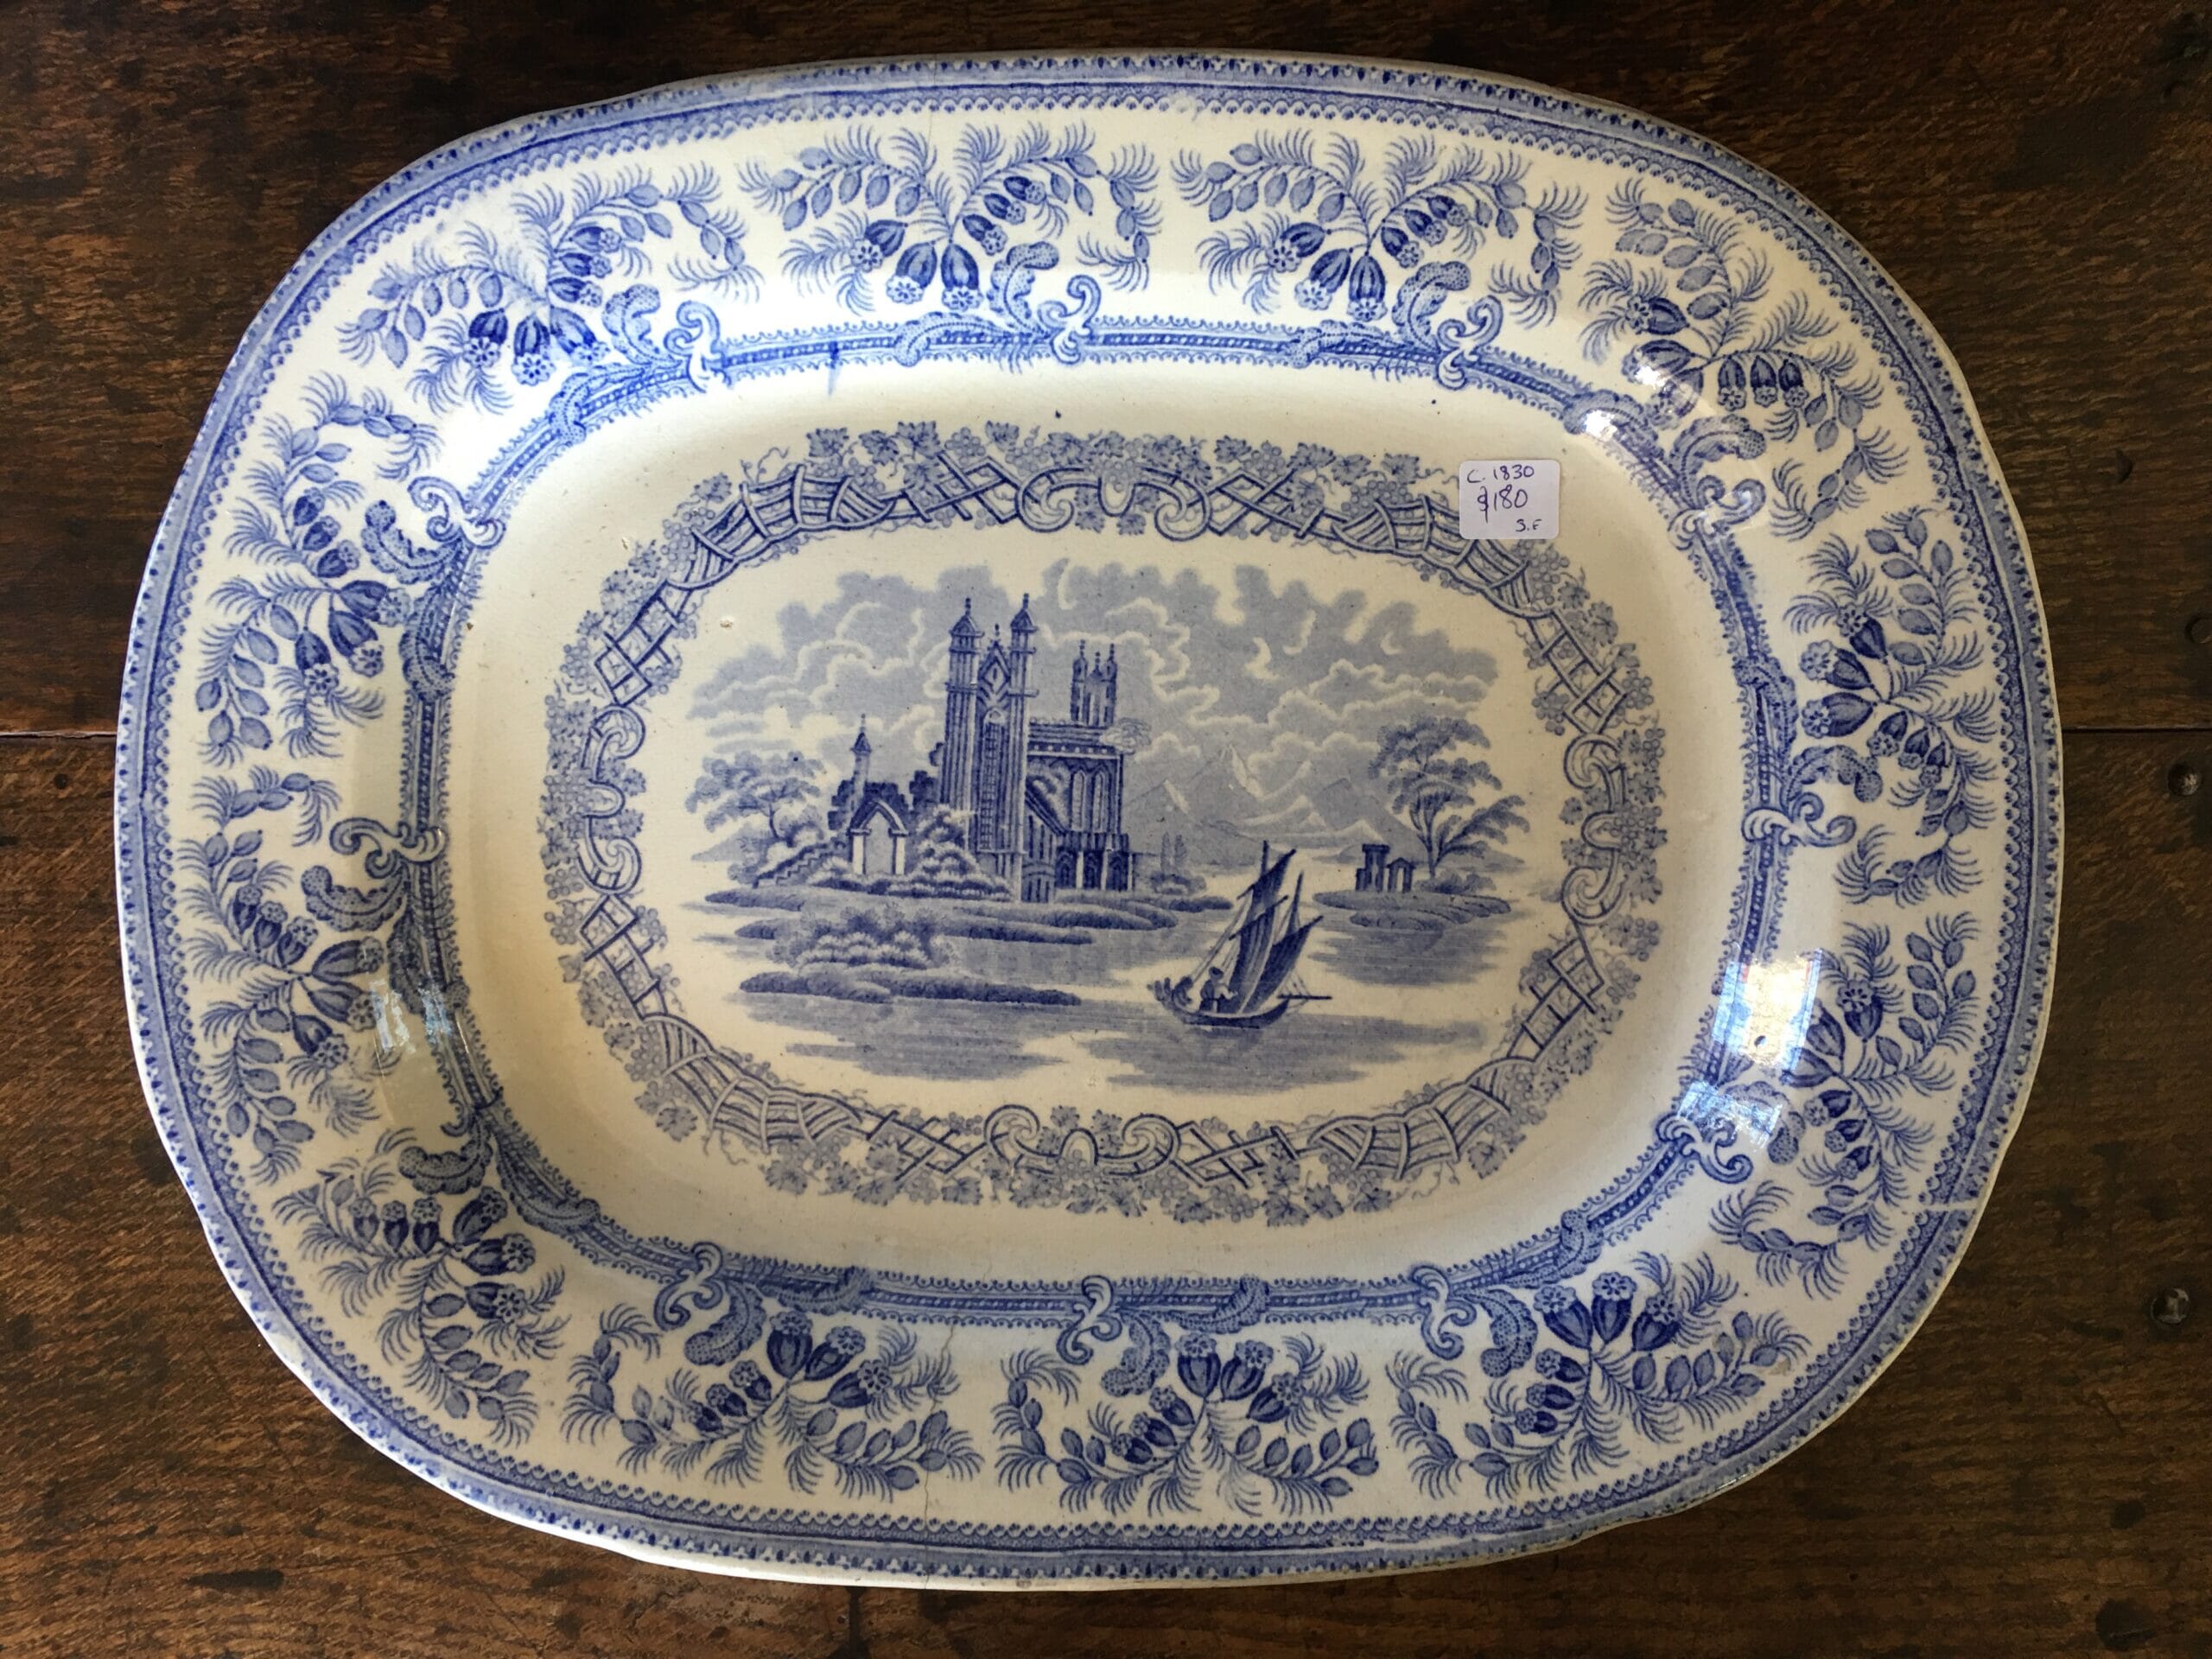 Staffordshire Pottery meat platter, blue ruins & landscape print, c. 1830-0